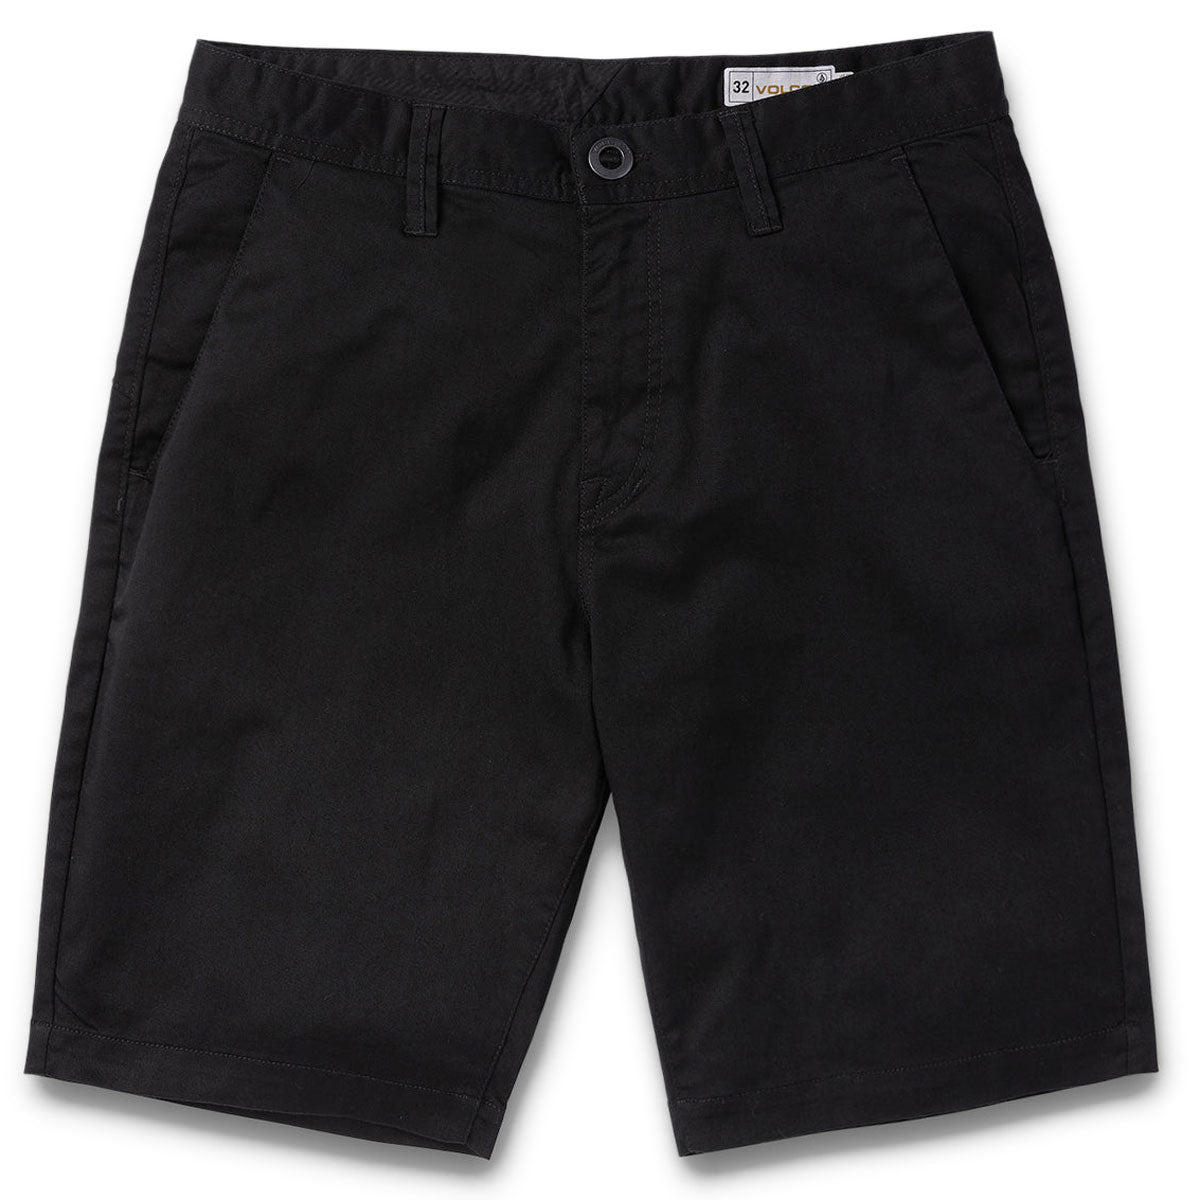 Volcom Fickin Modern Stretch 21 Shorts - Black image 1